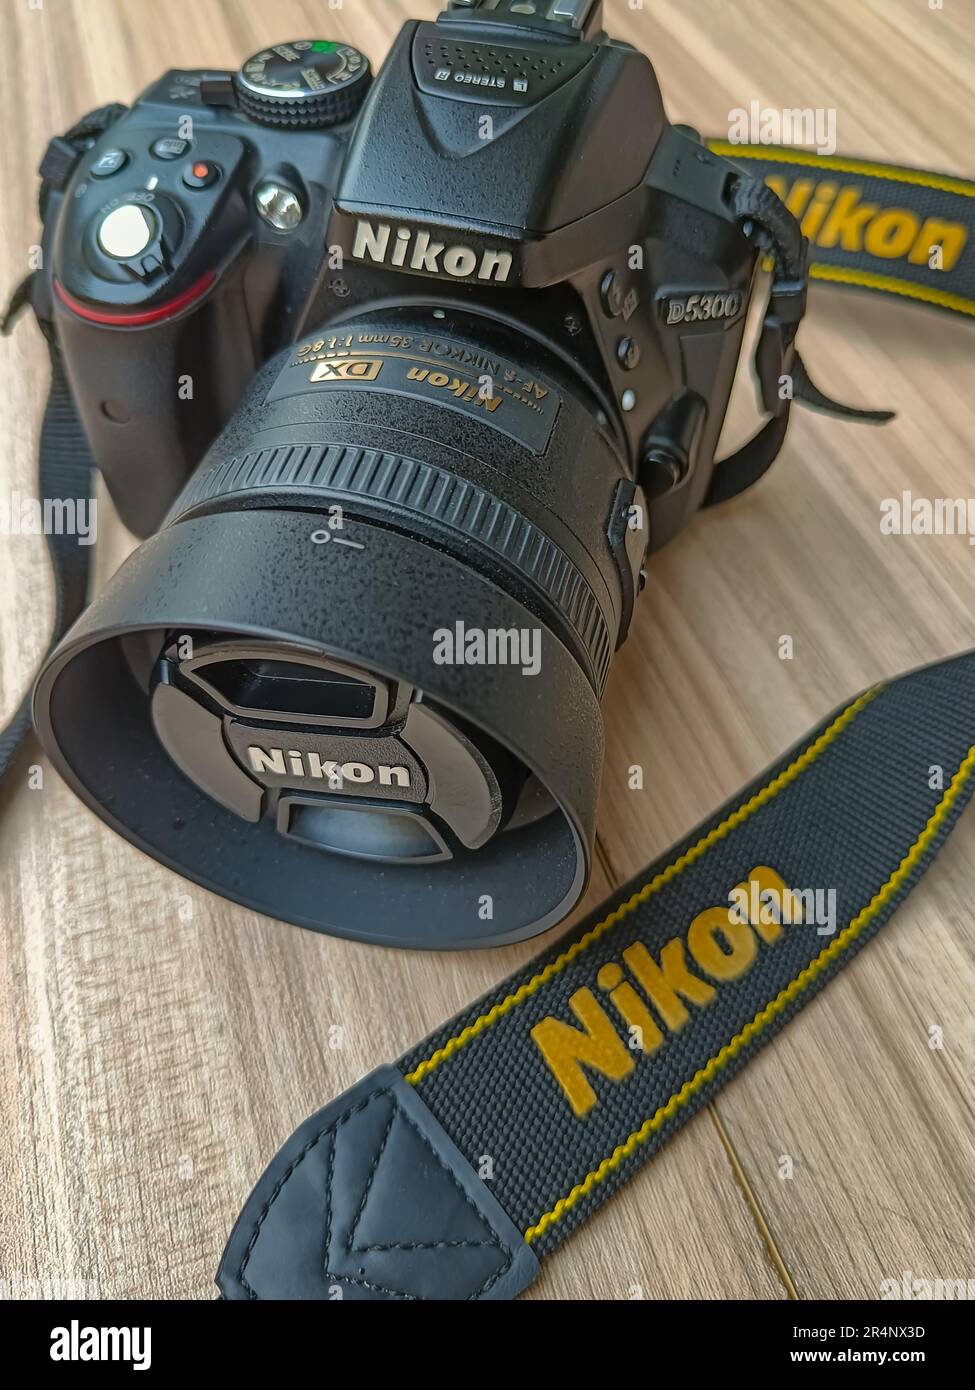 Nikon d5300 hi-res stock photography and images - Alamy